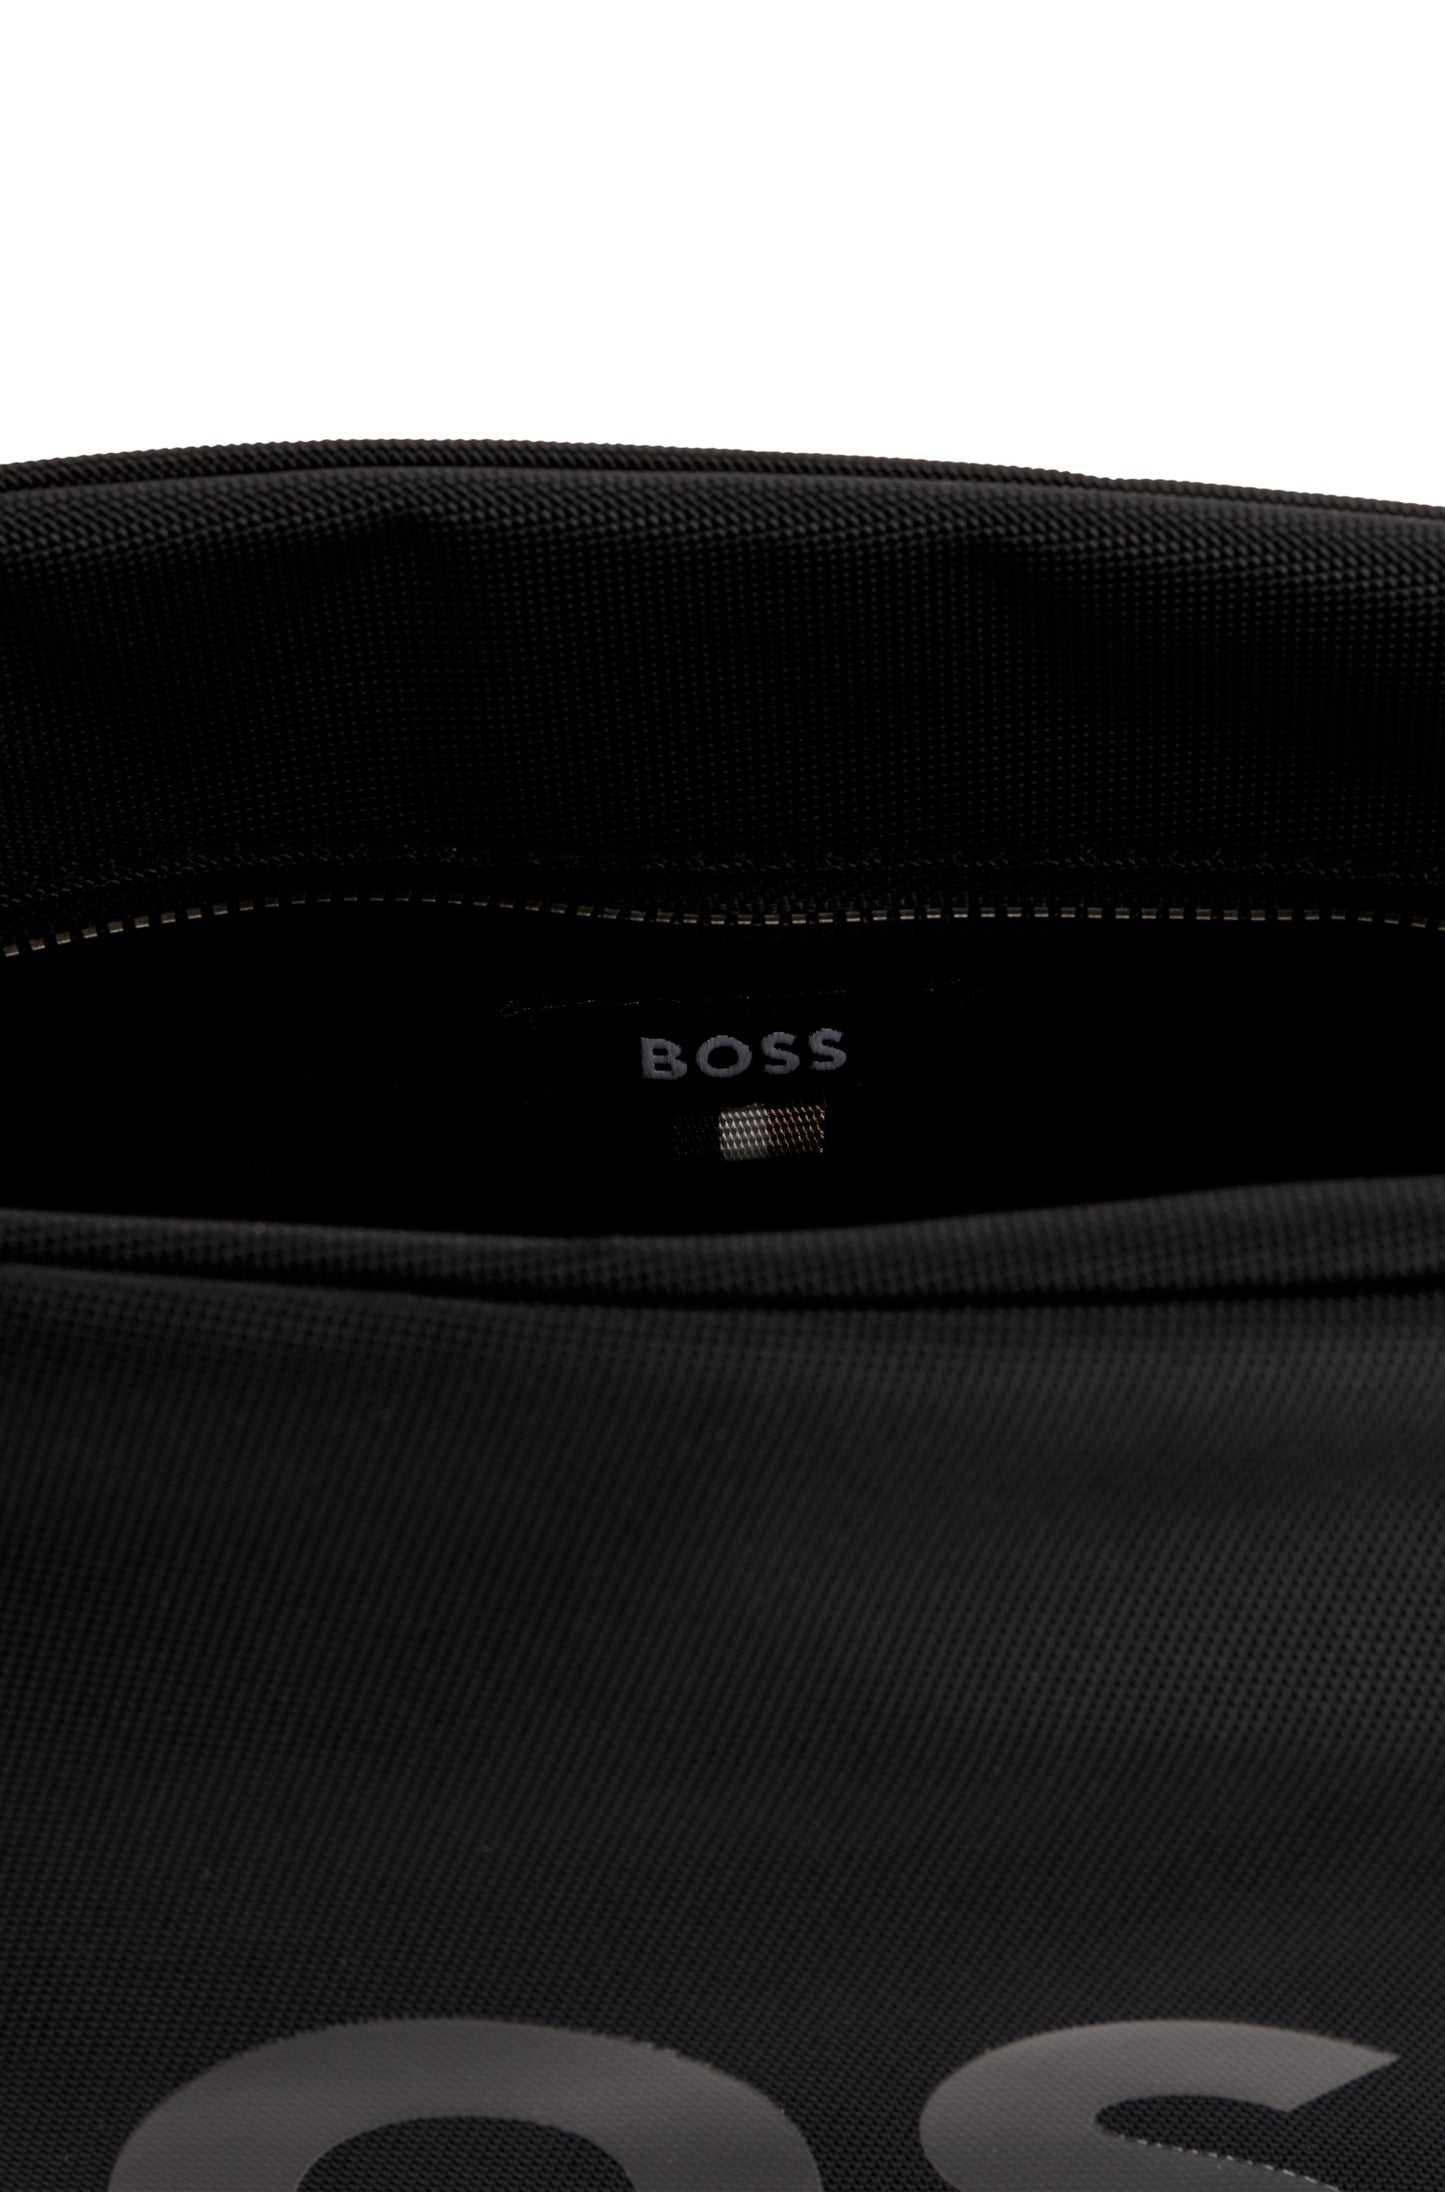 Hugo Boss Catch Leather Washbag Black